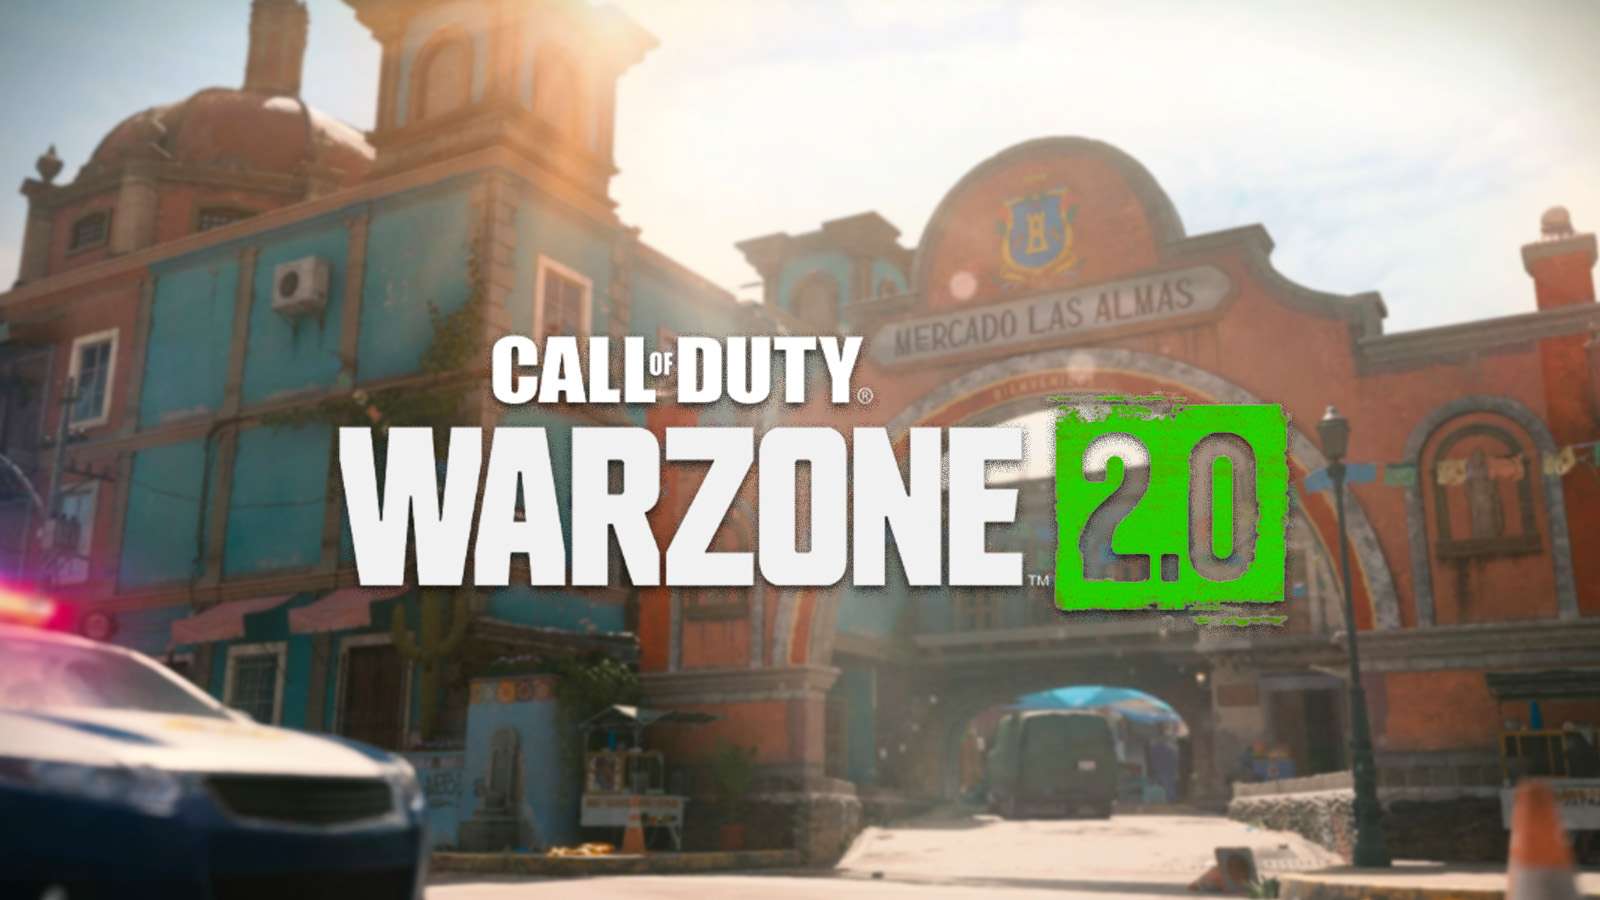 Warzone 2.0 logo on Mercado Las Almas Modern Warfare 2 map